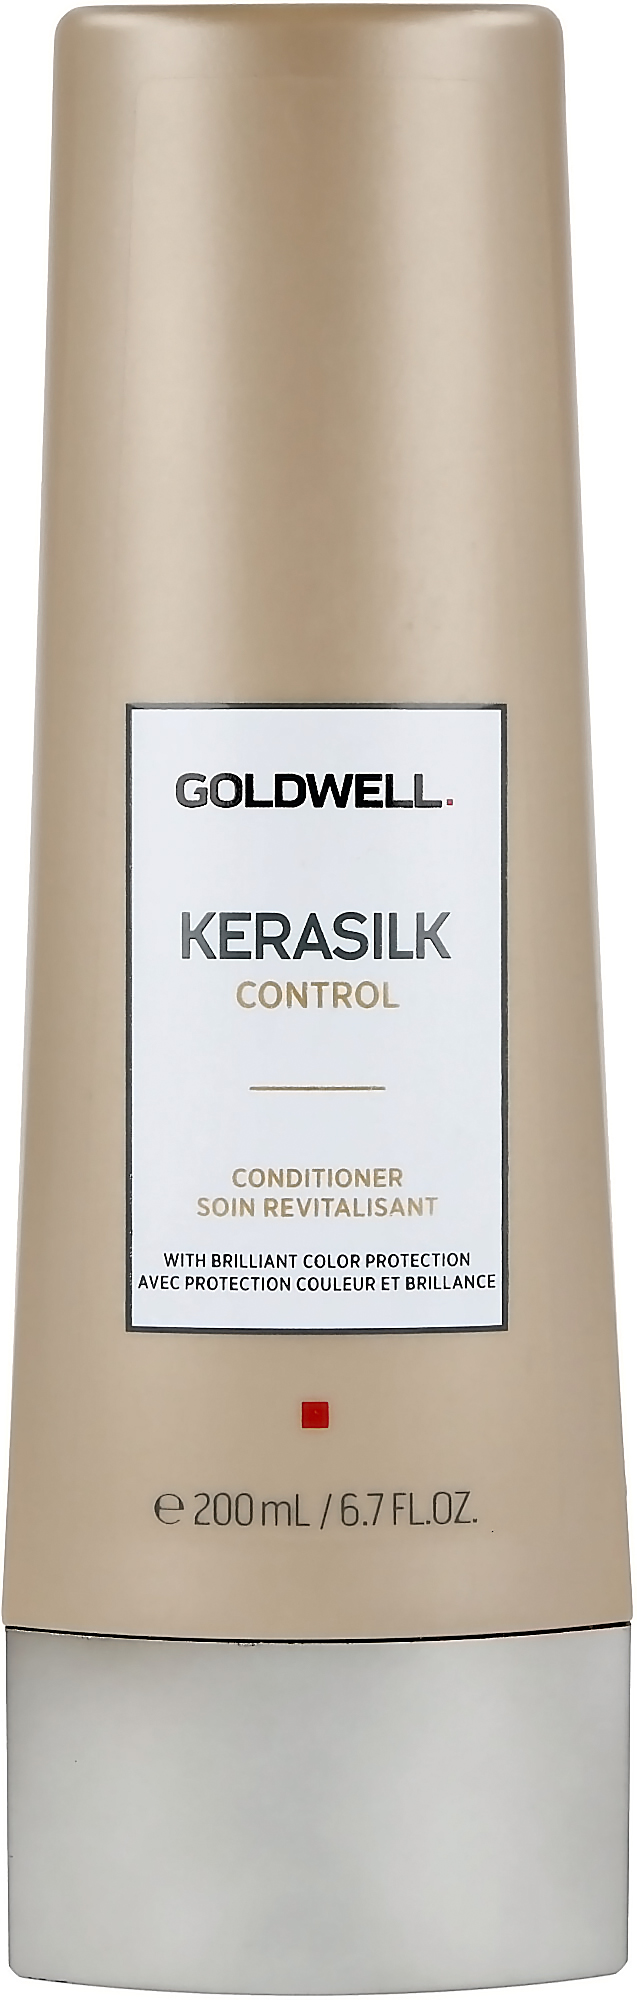 Goldwell Kerasilk Control Conditioner 200ml